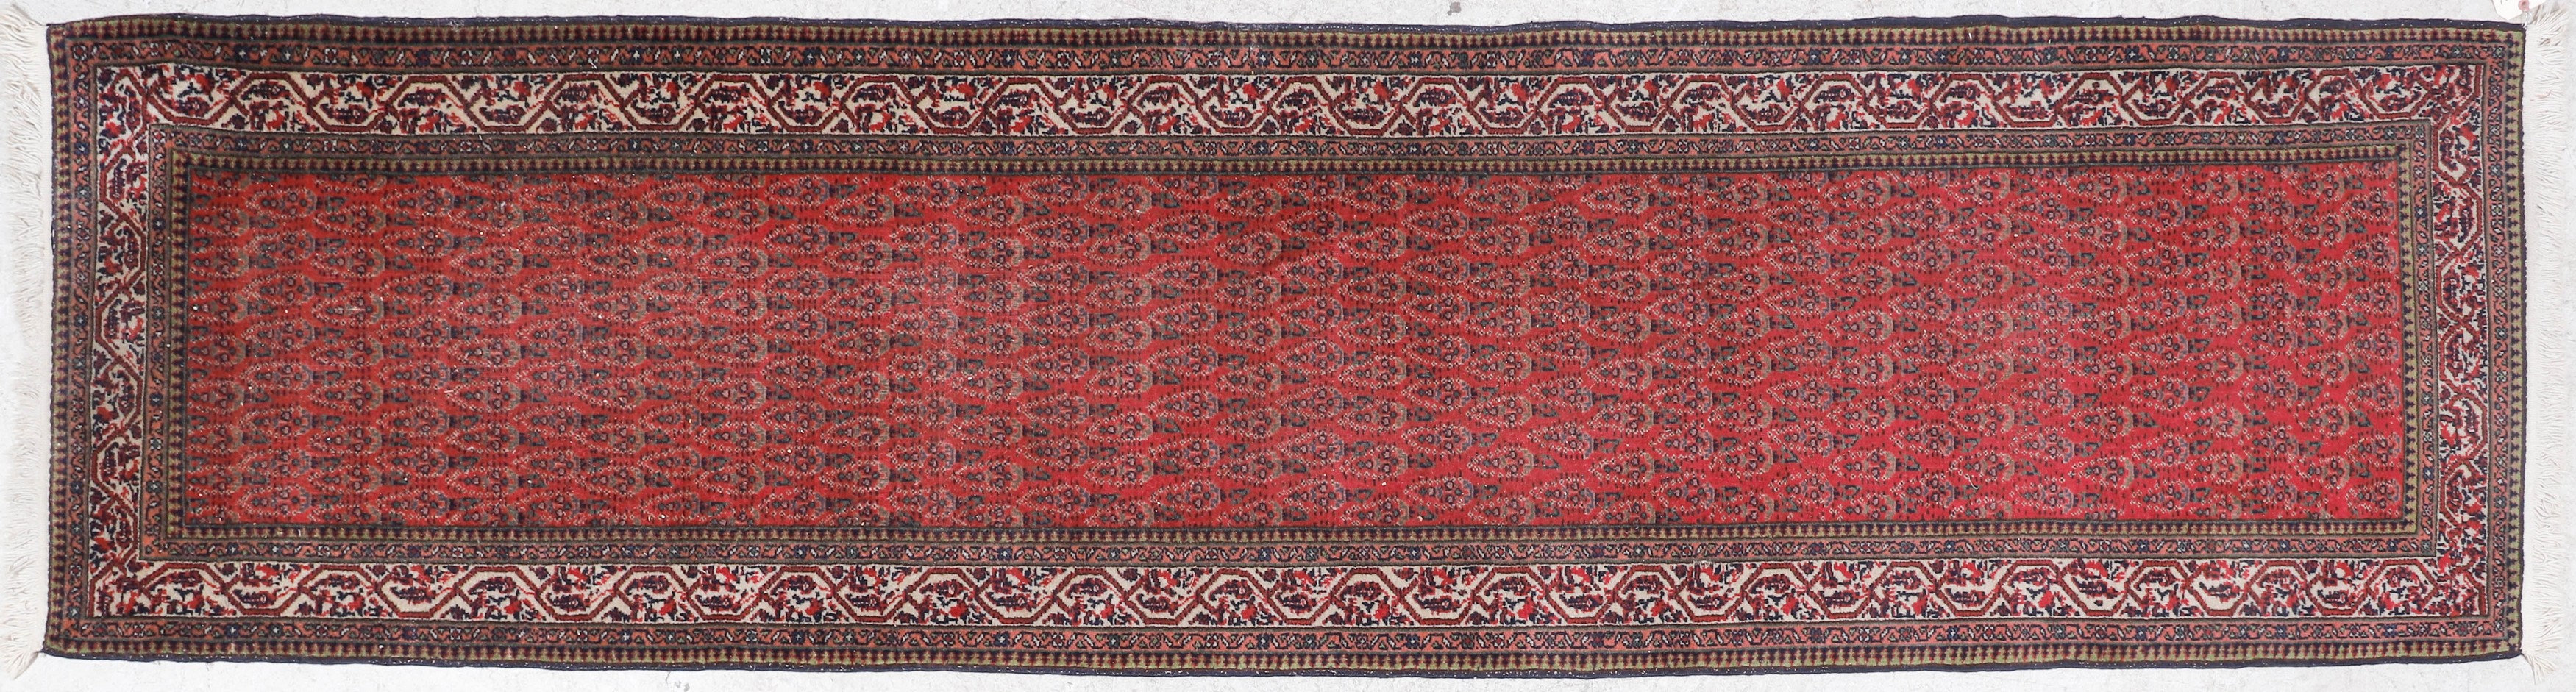 2 9 X 10 8 Antique Persian Seraband 317e02